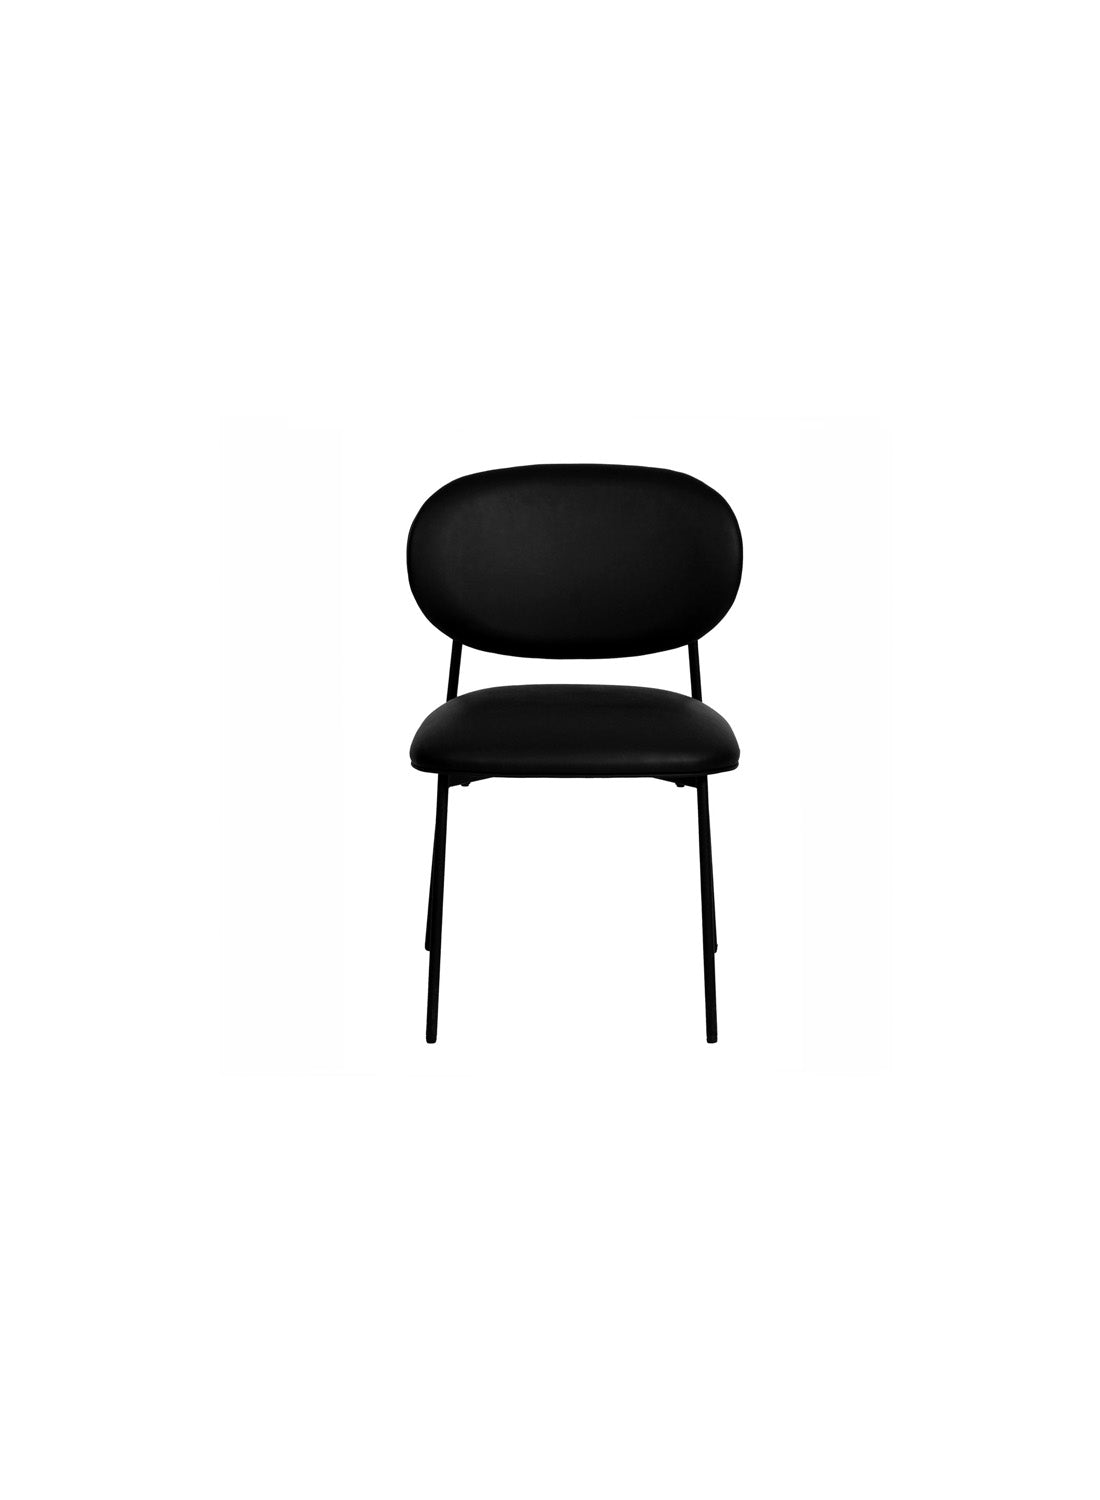 Grayson Dining Chair Set of 2, black